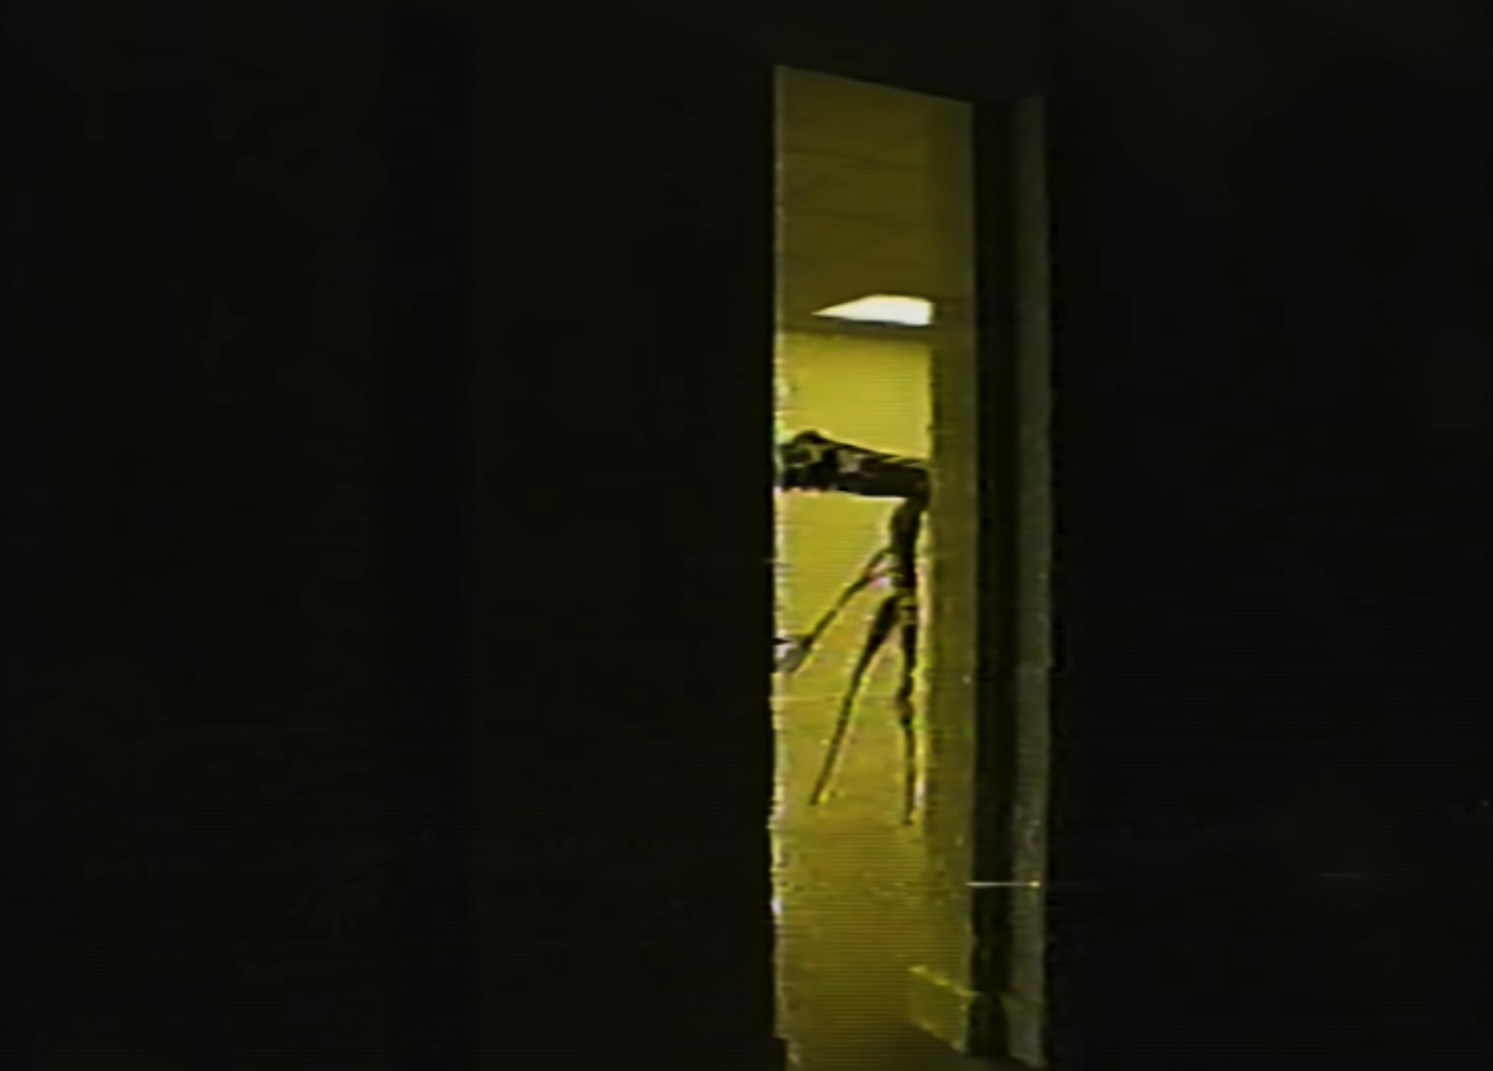 Backrooms, la popular serie creepypasta de YouTube, se convertira en una pelicula de terror de A24